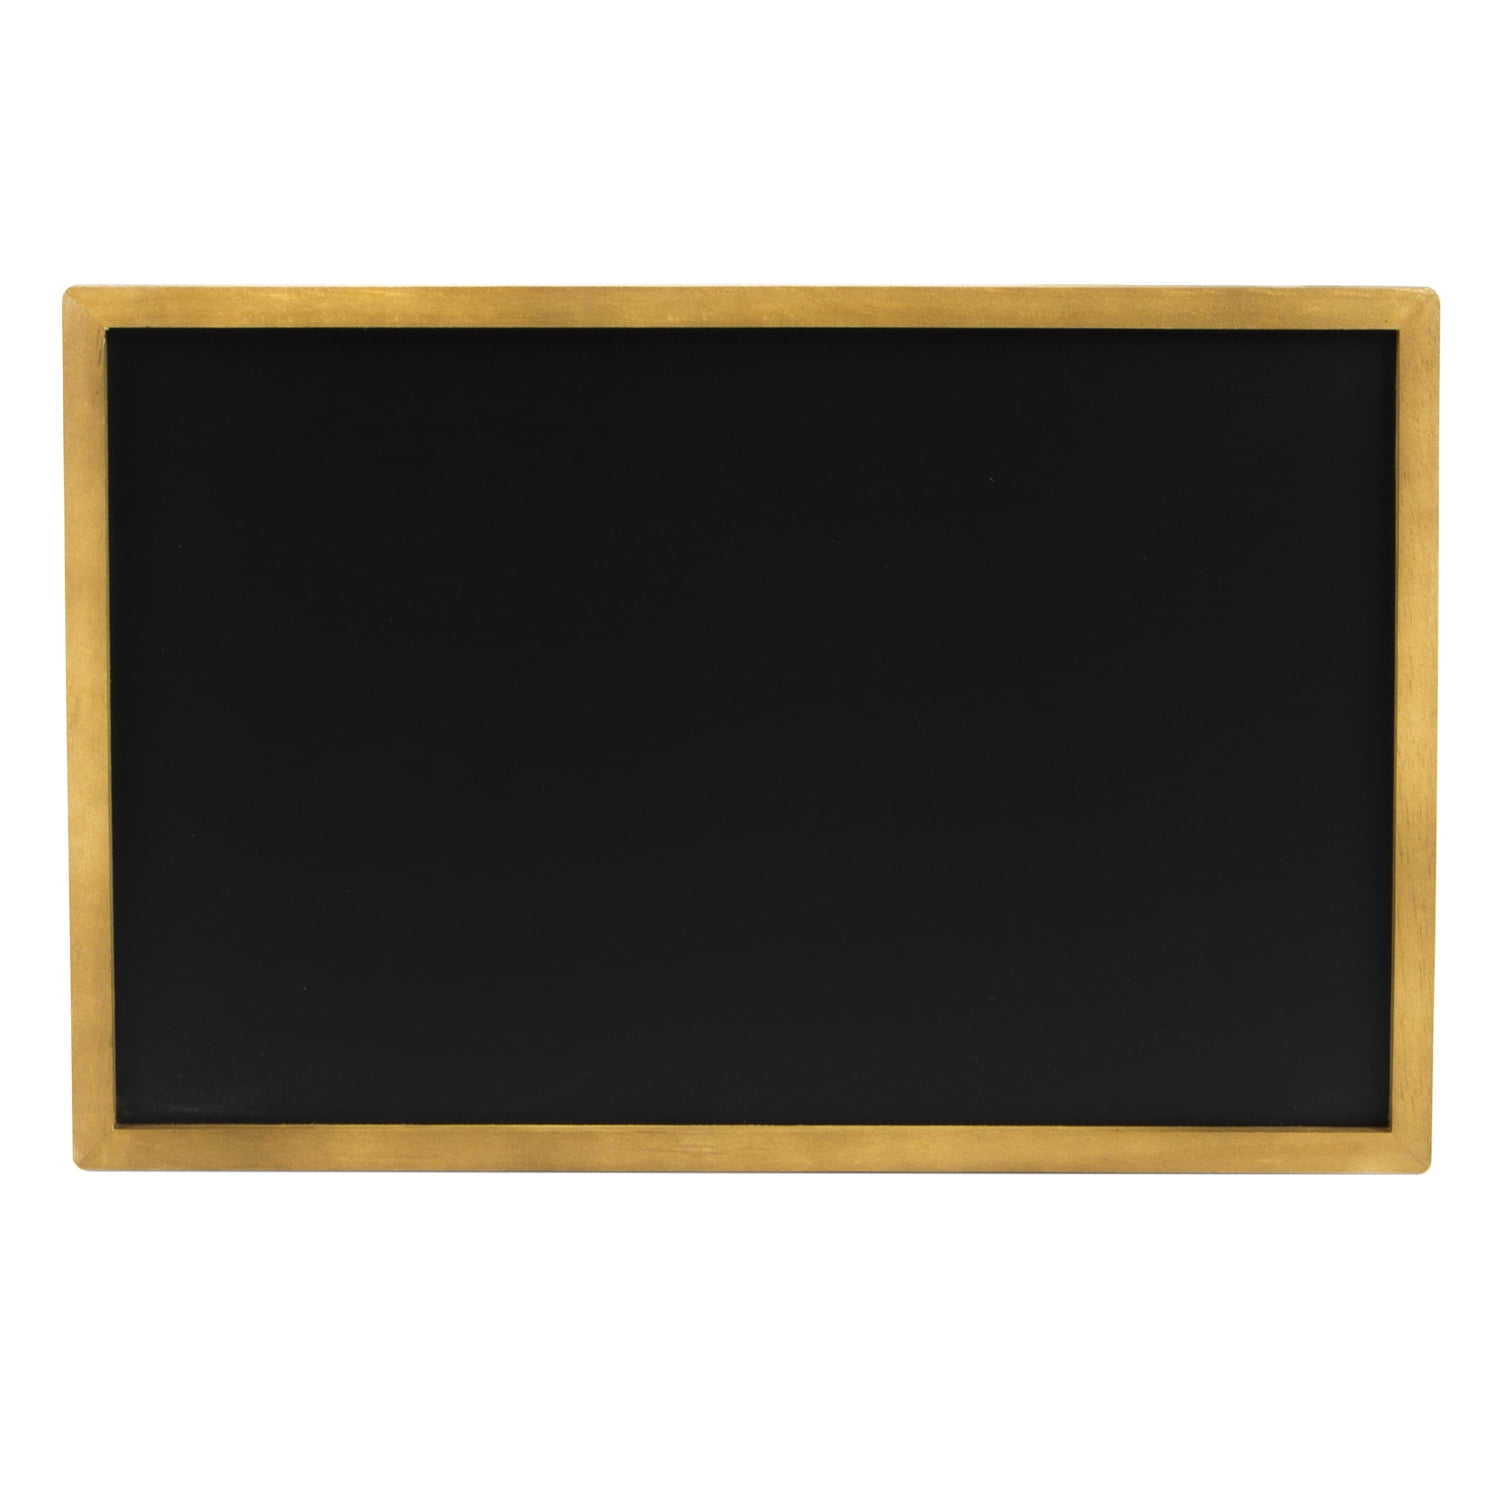 NEW Vintage Wooden Framed Magnetic Chalkboard Sign  11"x17" by VersaChalk 